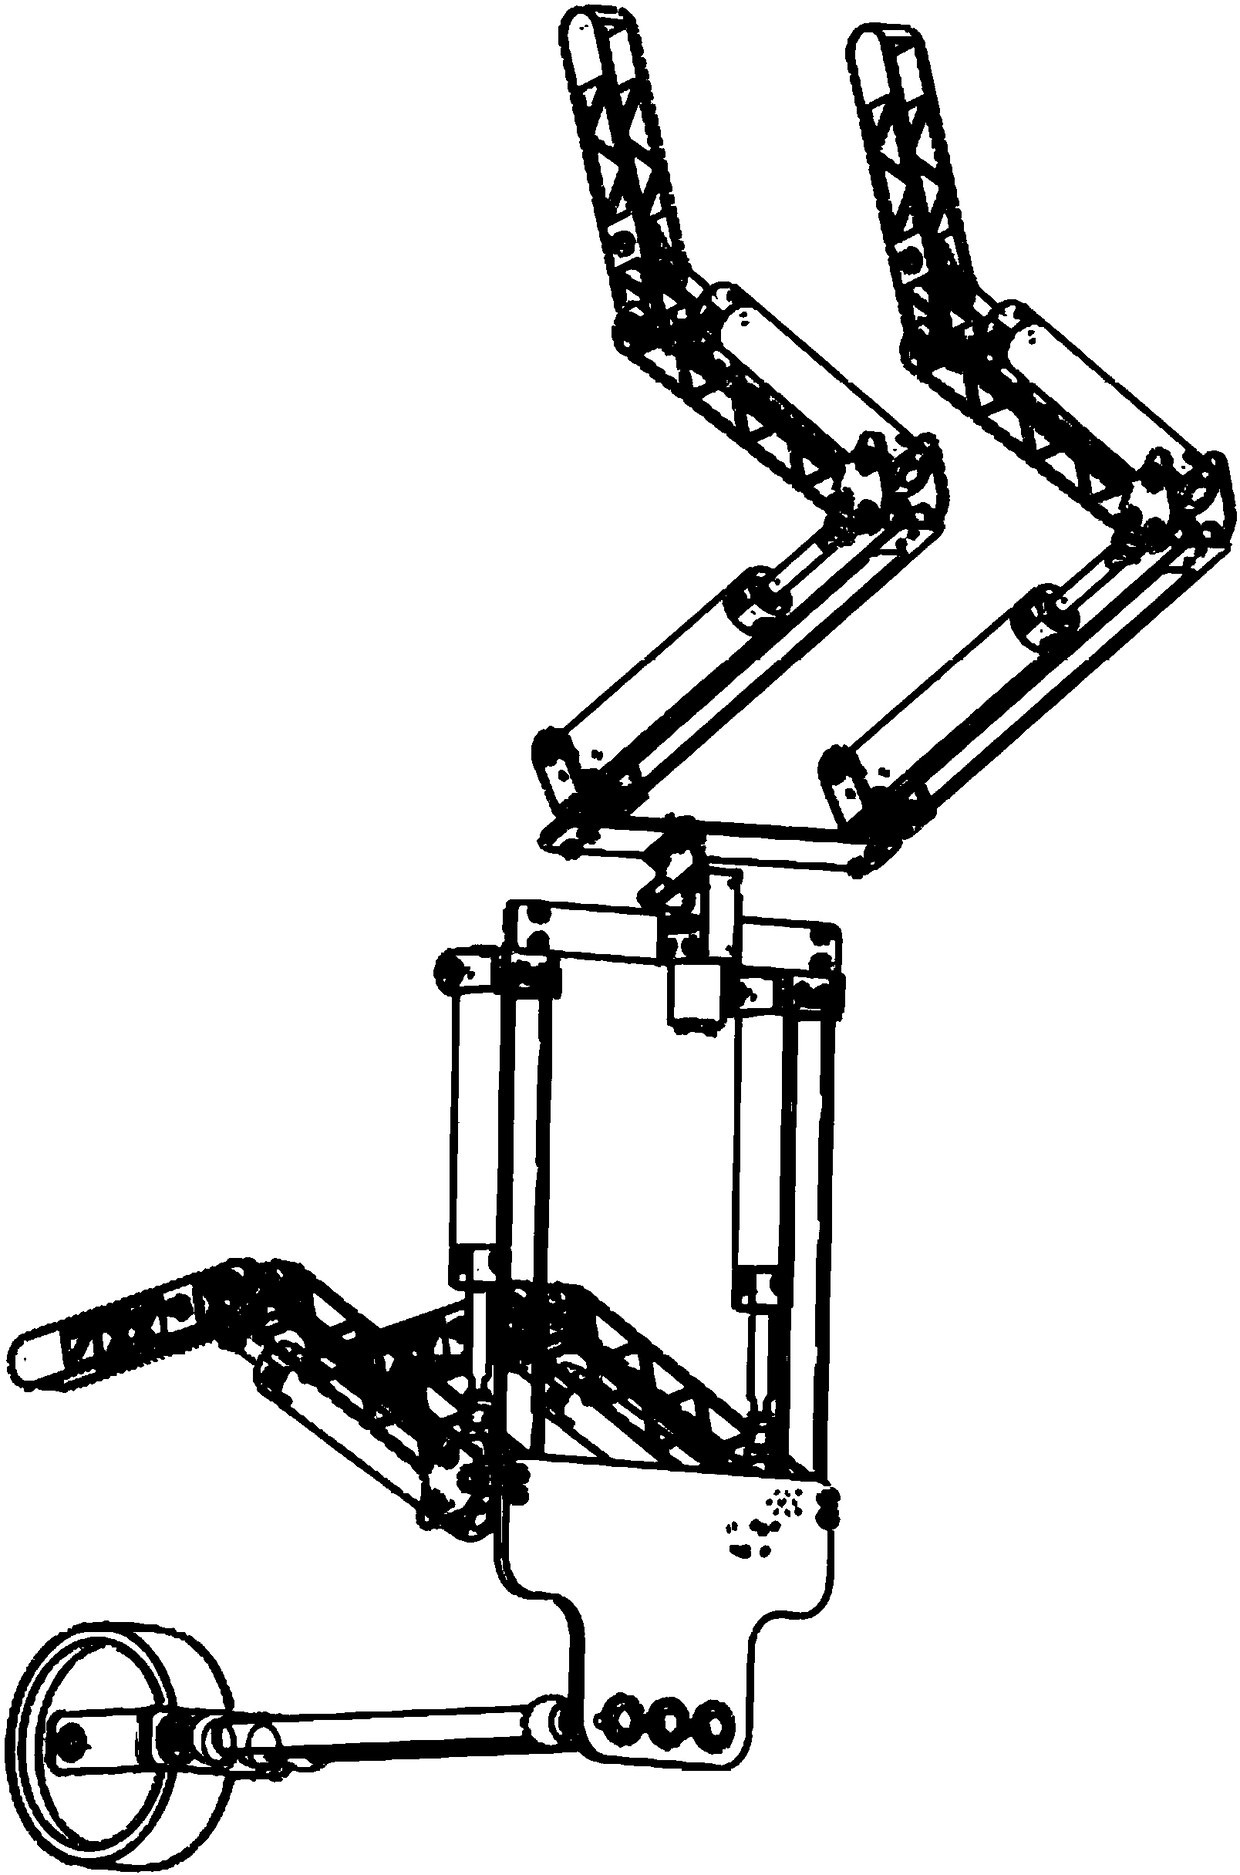 Multifunctional multi-legged bionic robot system on basis of pneumatic systems